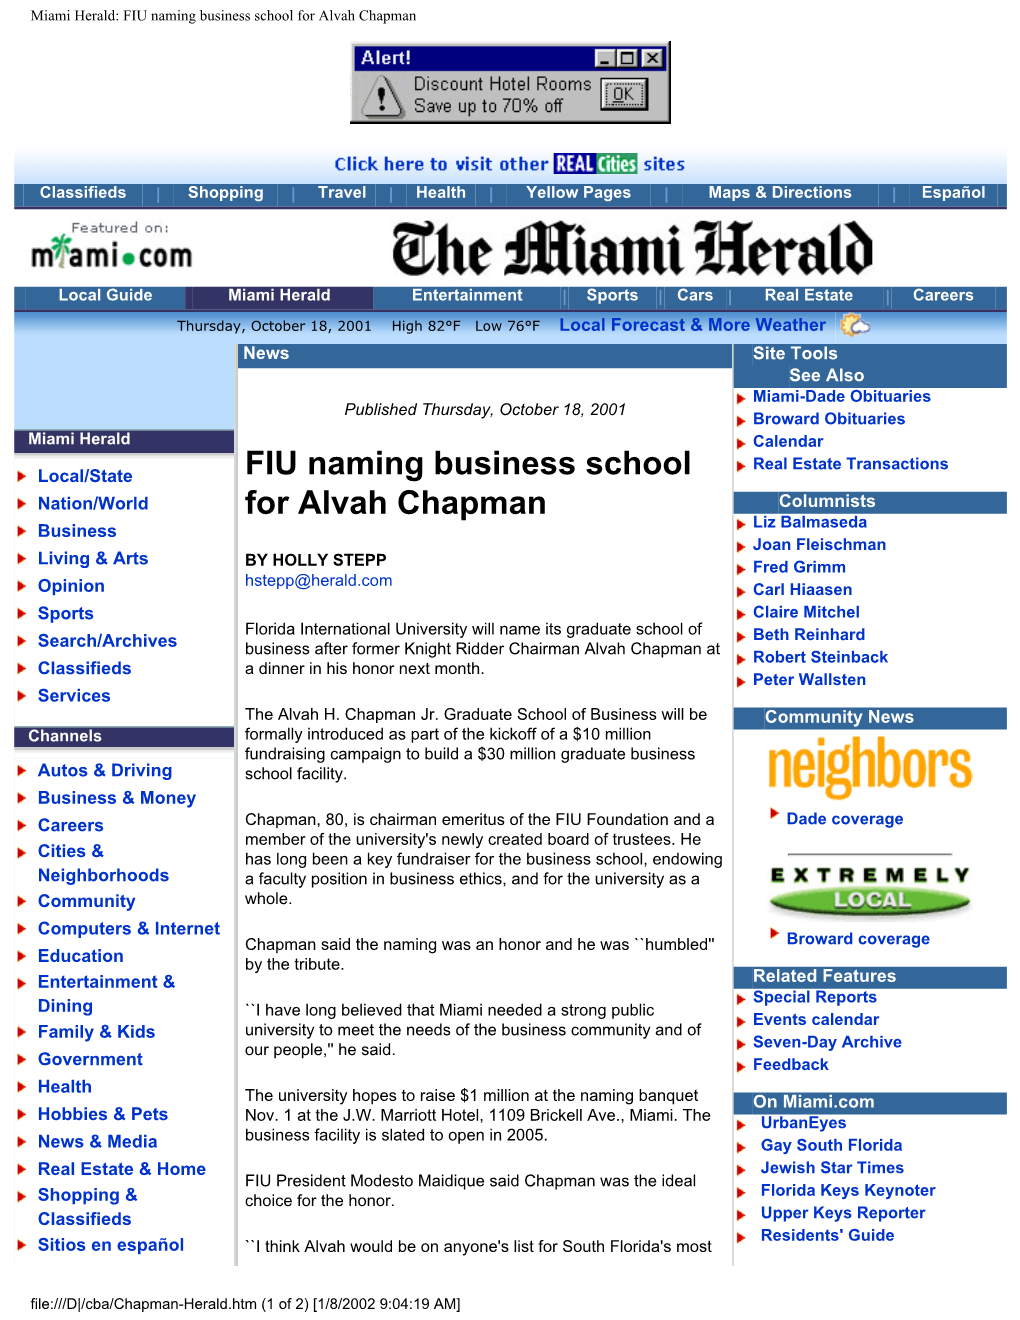 Miami Herald: FIU Naming Business School for Alvah Chapman